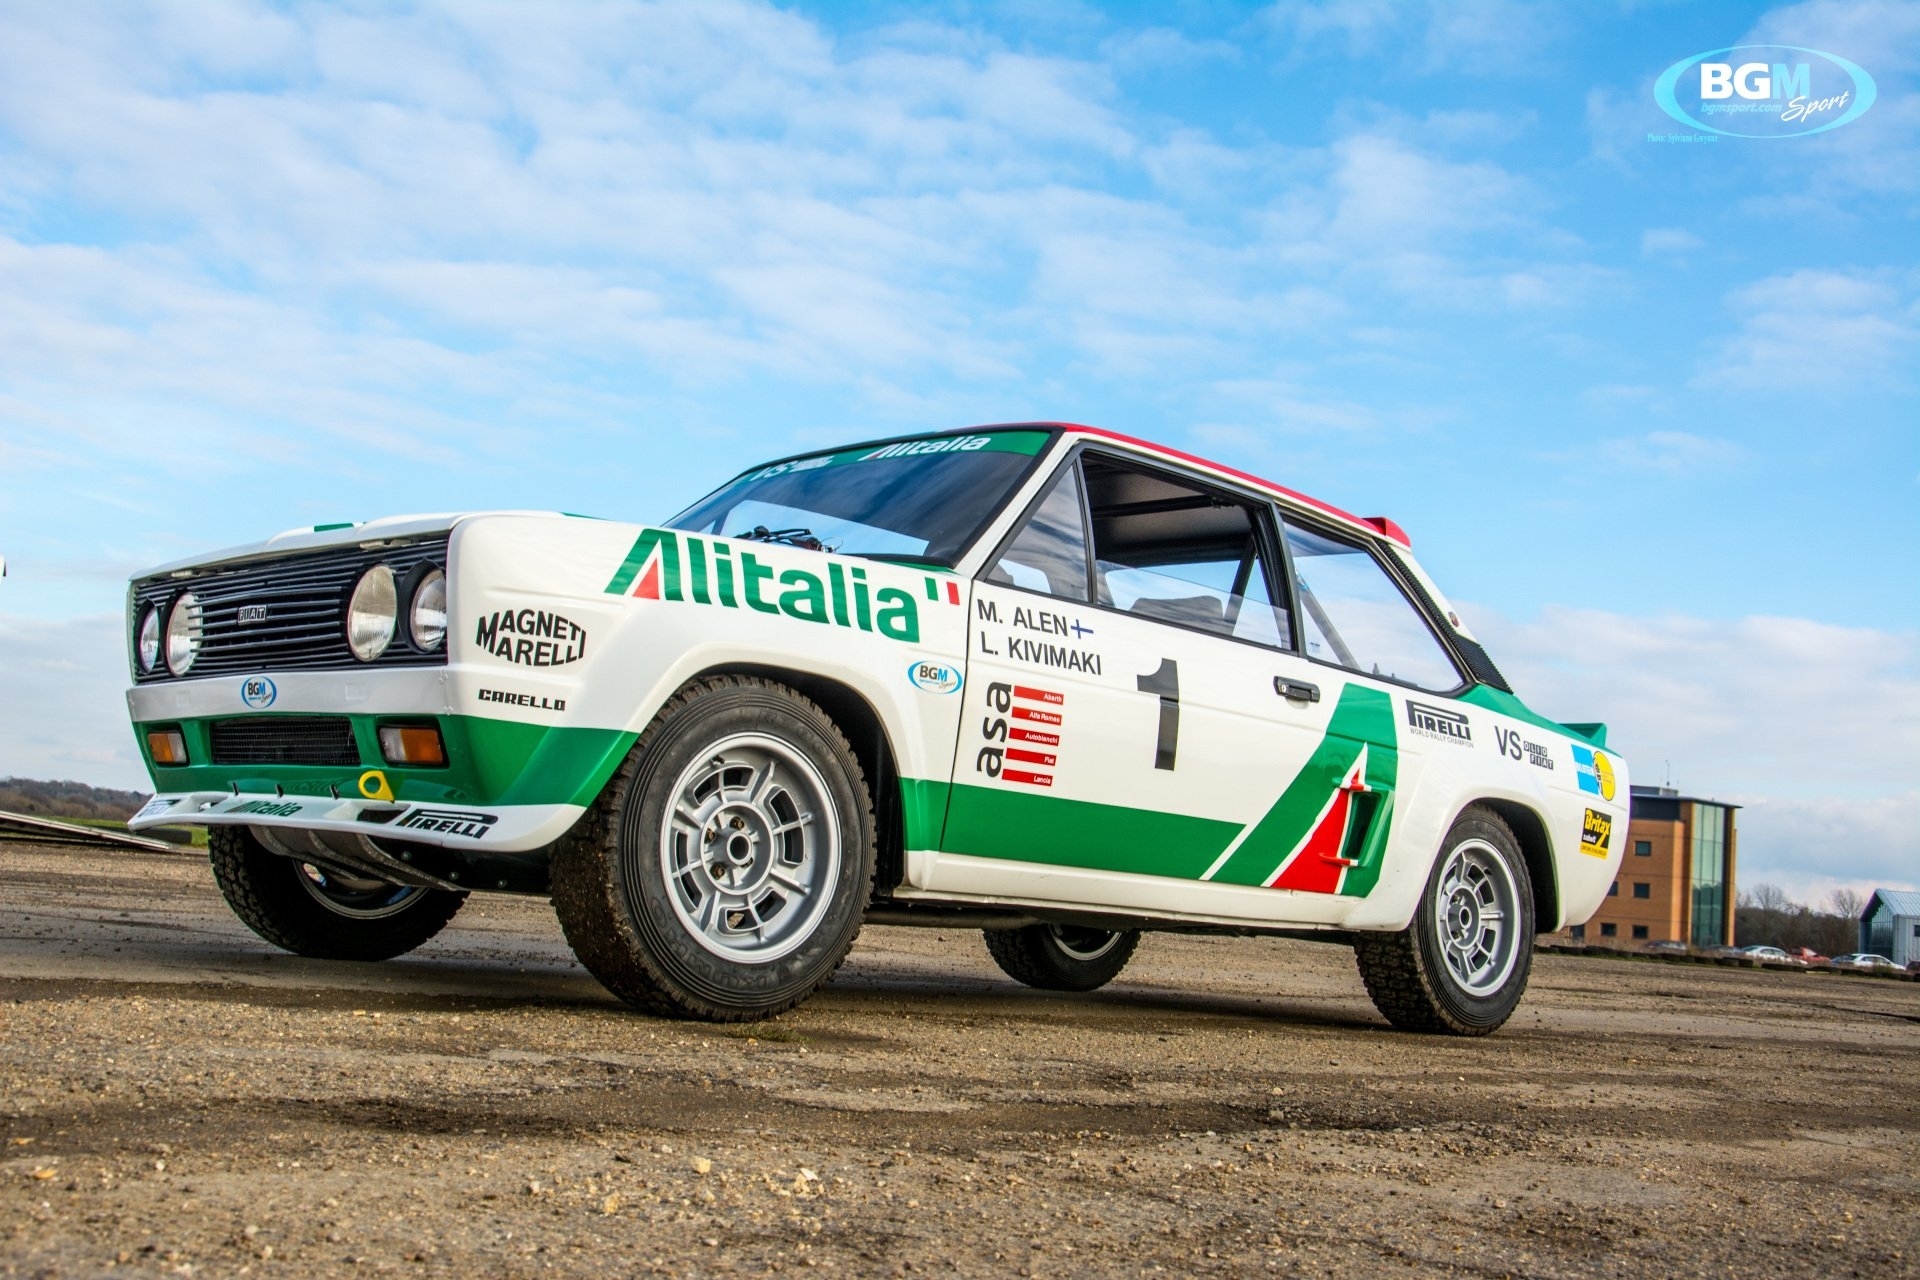 fiat-131-abarth-grp-4-rally-car-42-small